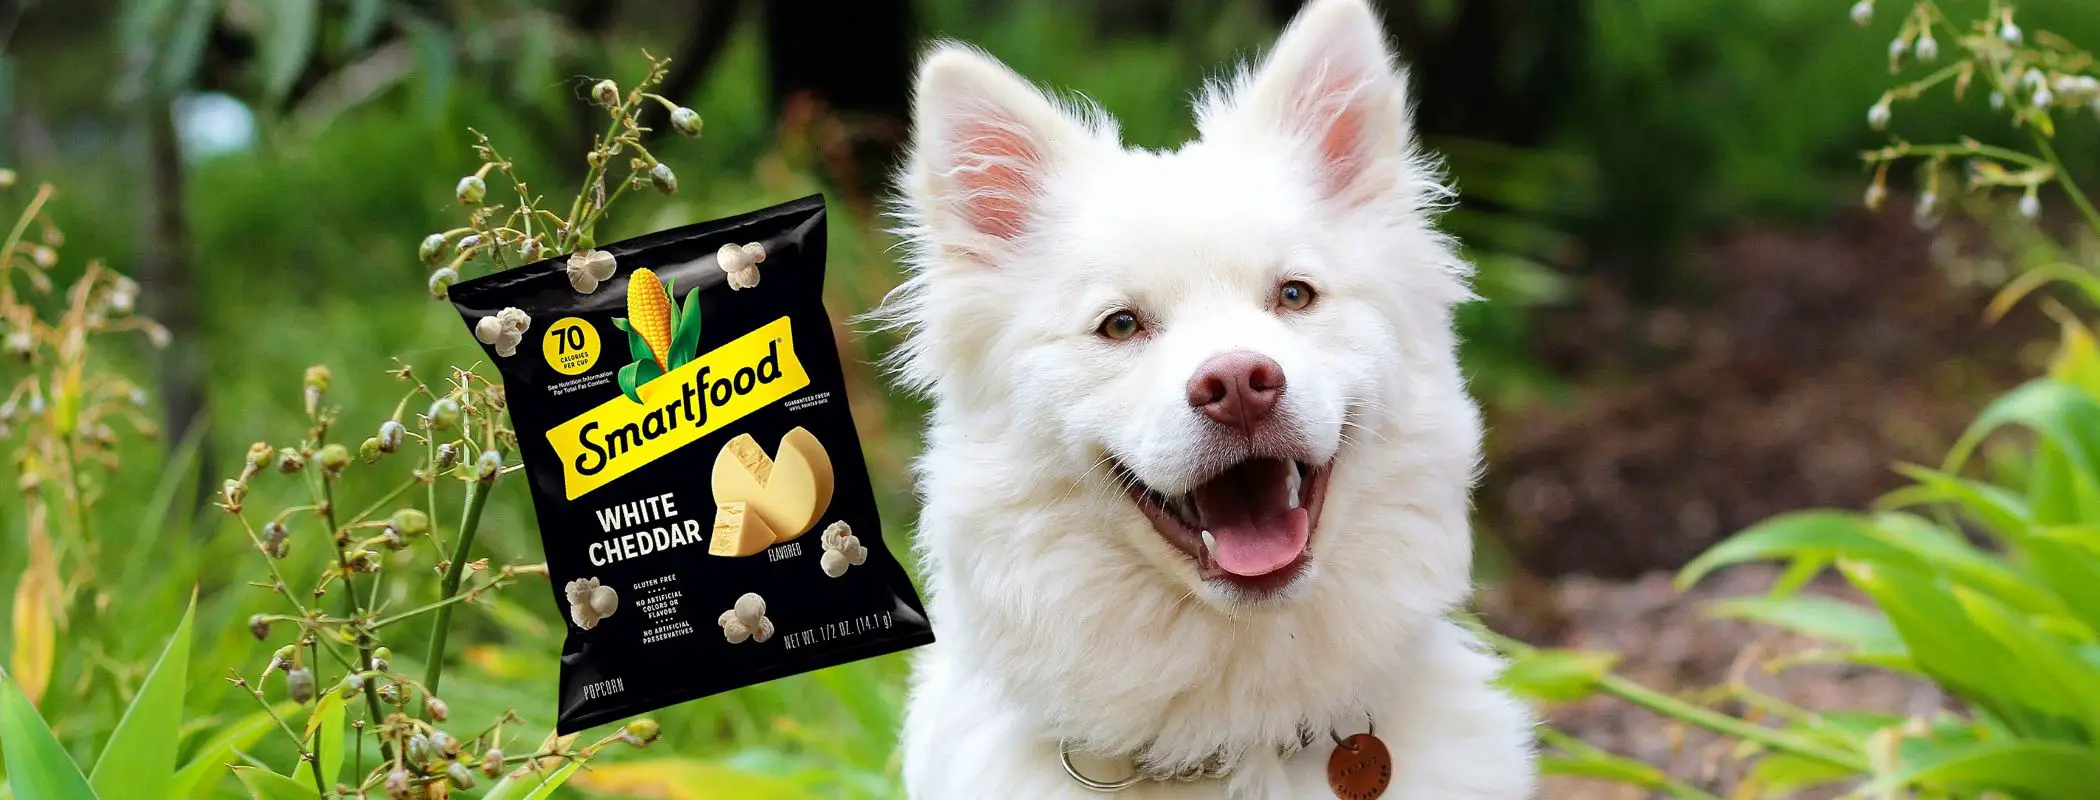 Can Dogs Eat Smartfood Popcorn?